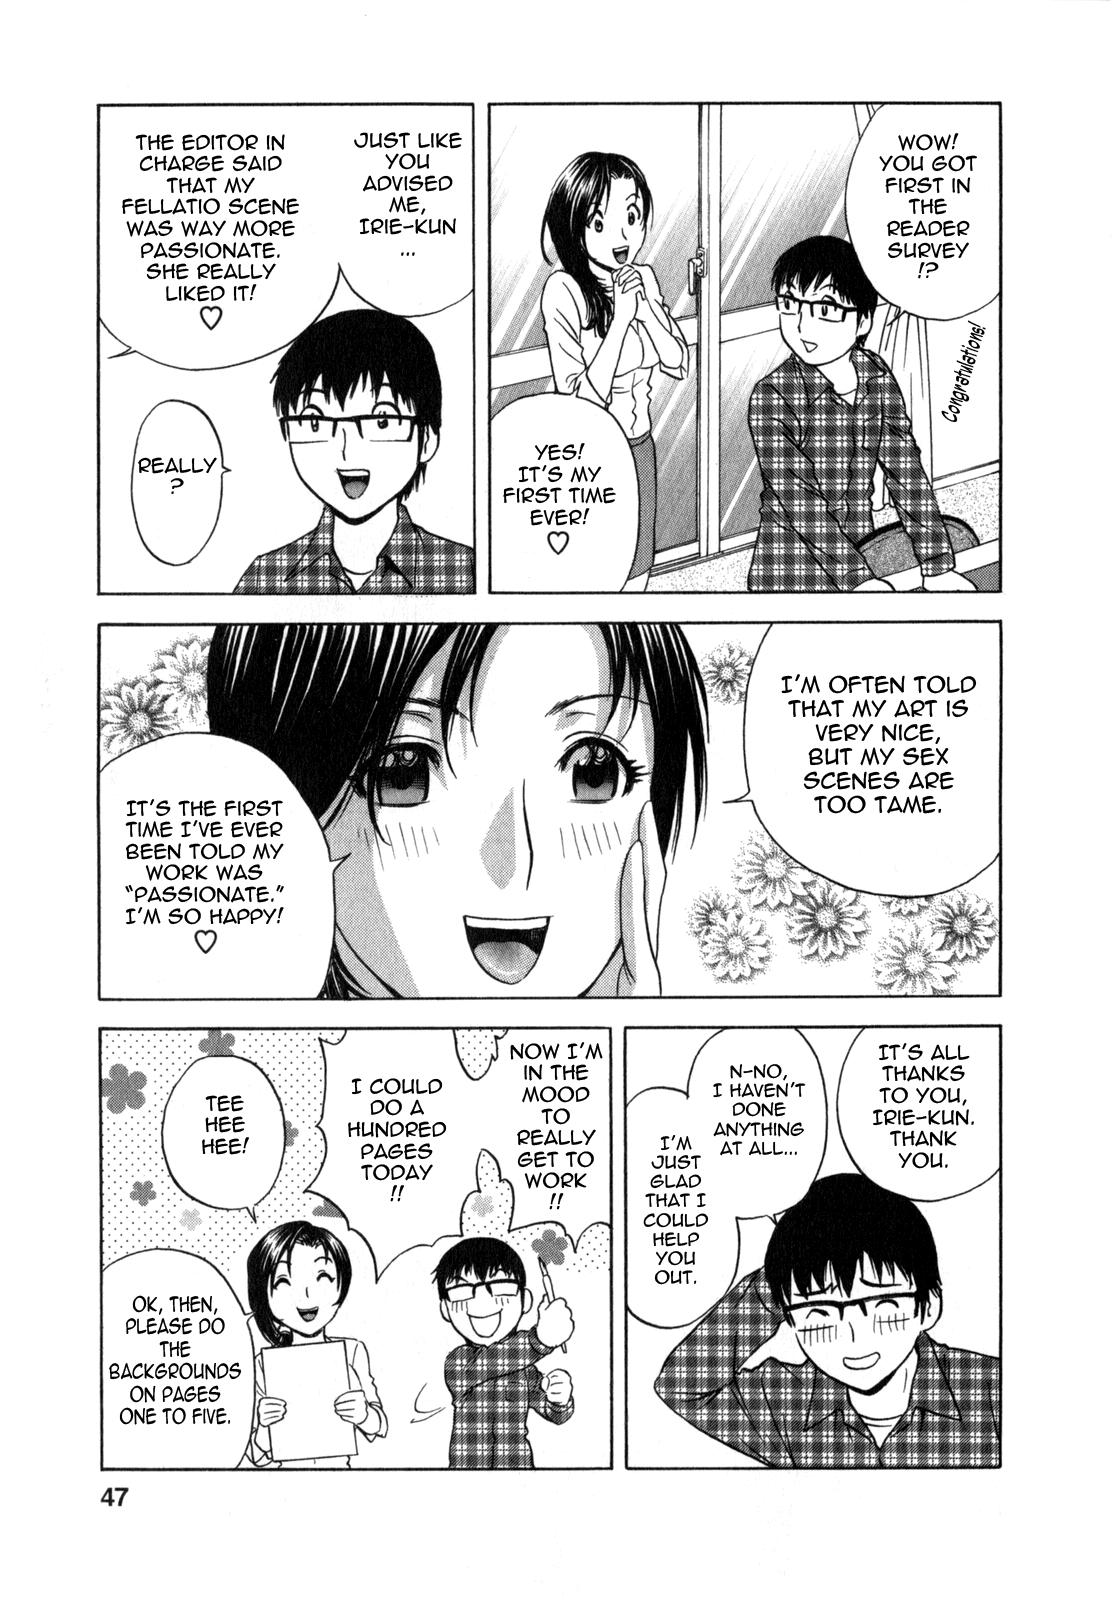 [Hidemaru] Life with Married Women Just Like a Manga 1 - Ch. 1-9 [English] {Tadanohito} 50